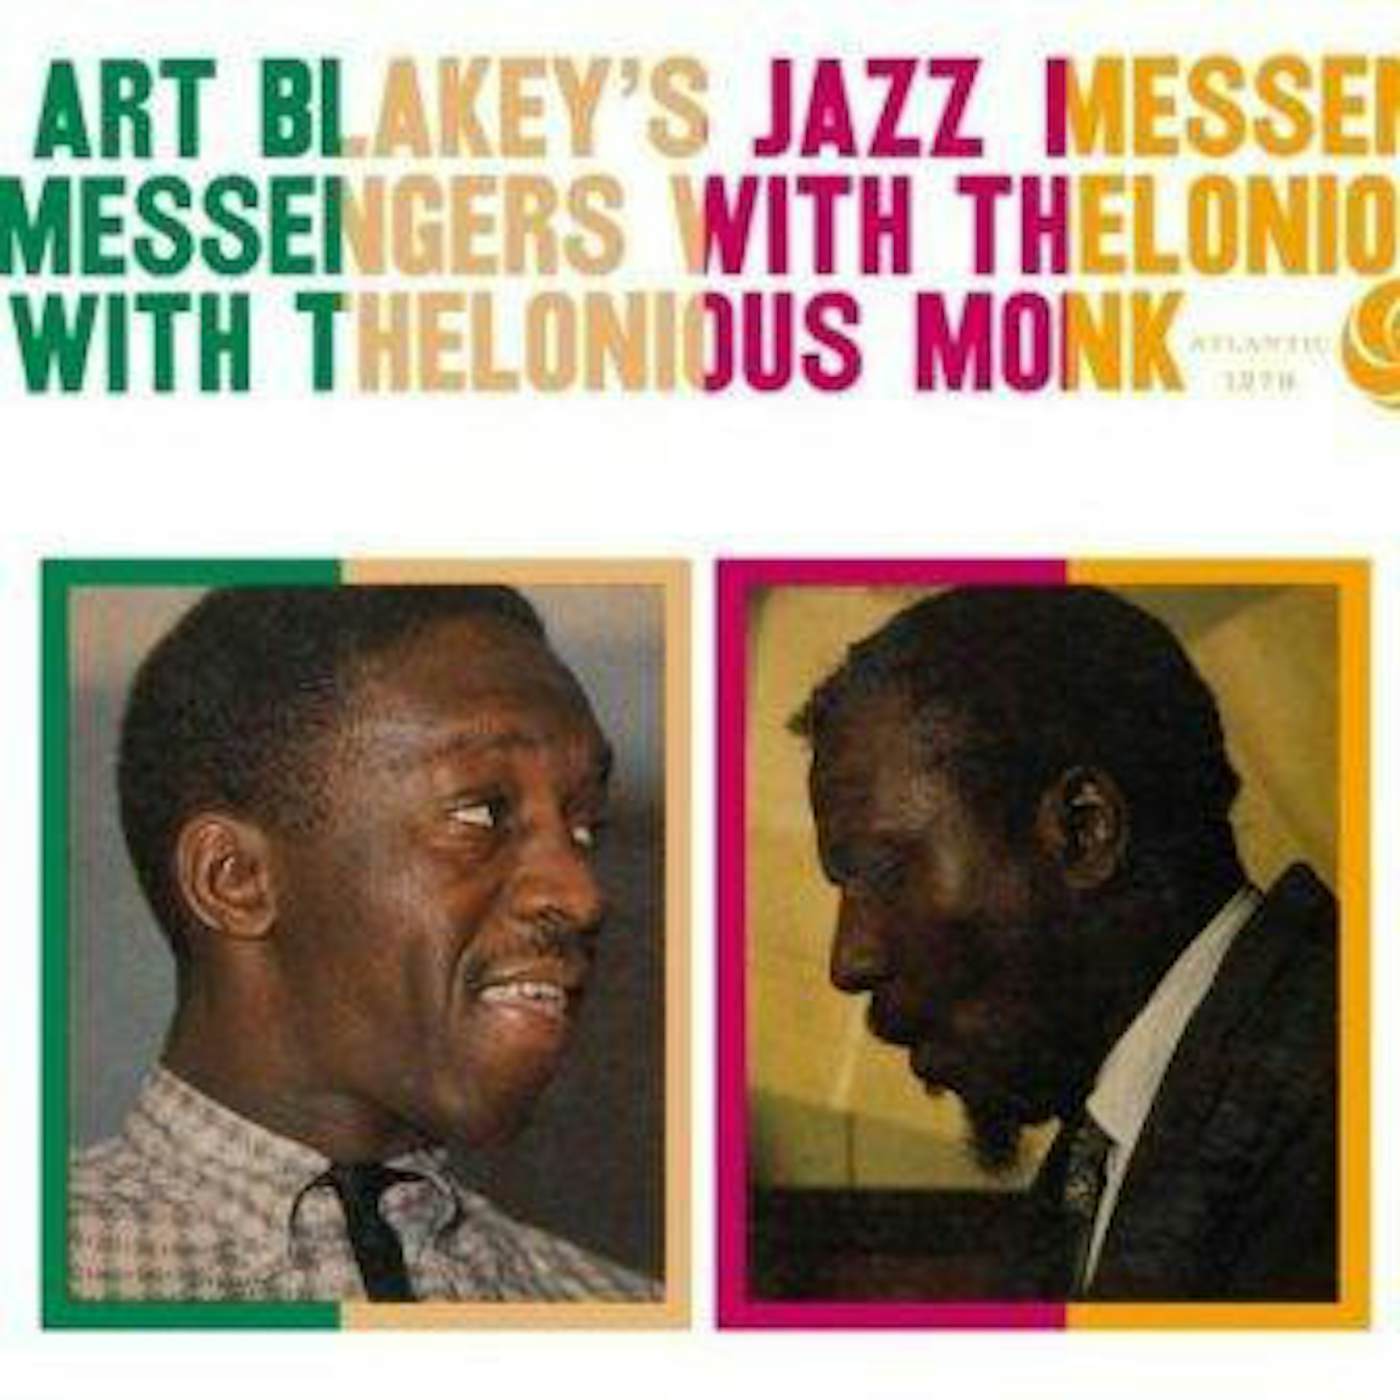 Art Blakey & The Jazz MessengersS JAZZ MESSENGERS WITH THELONIOUS MONK Vinyl Record